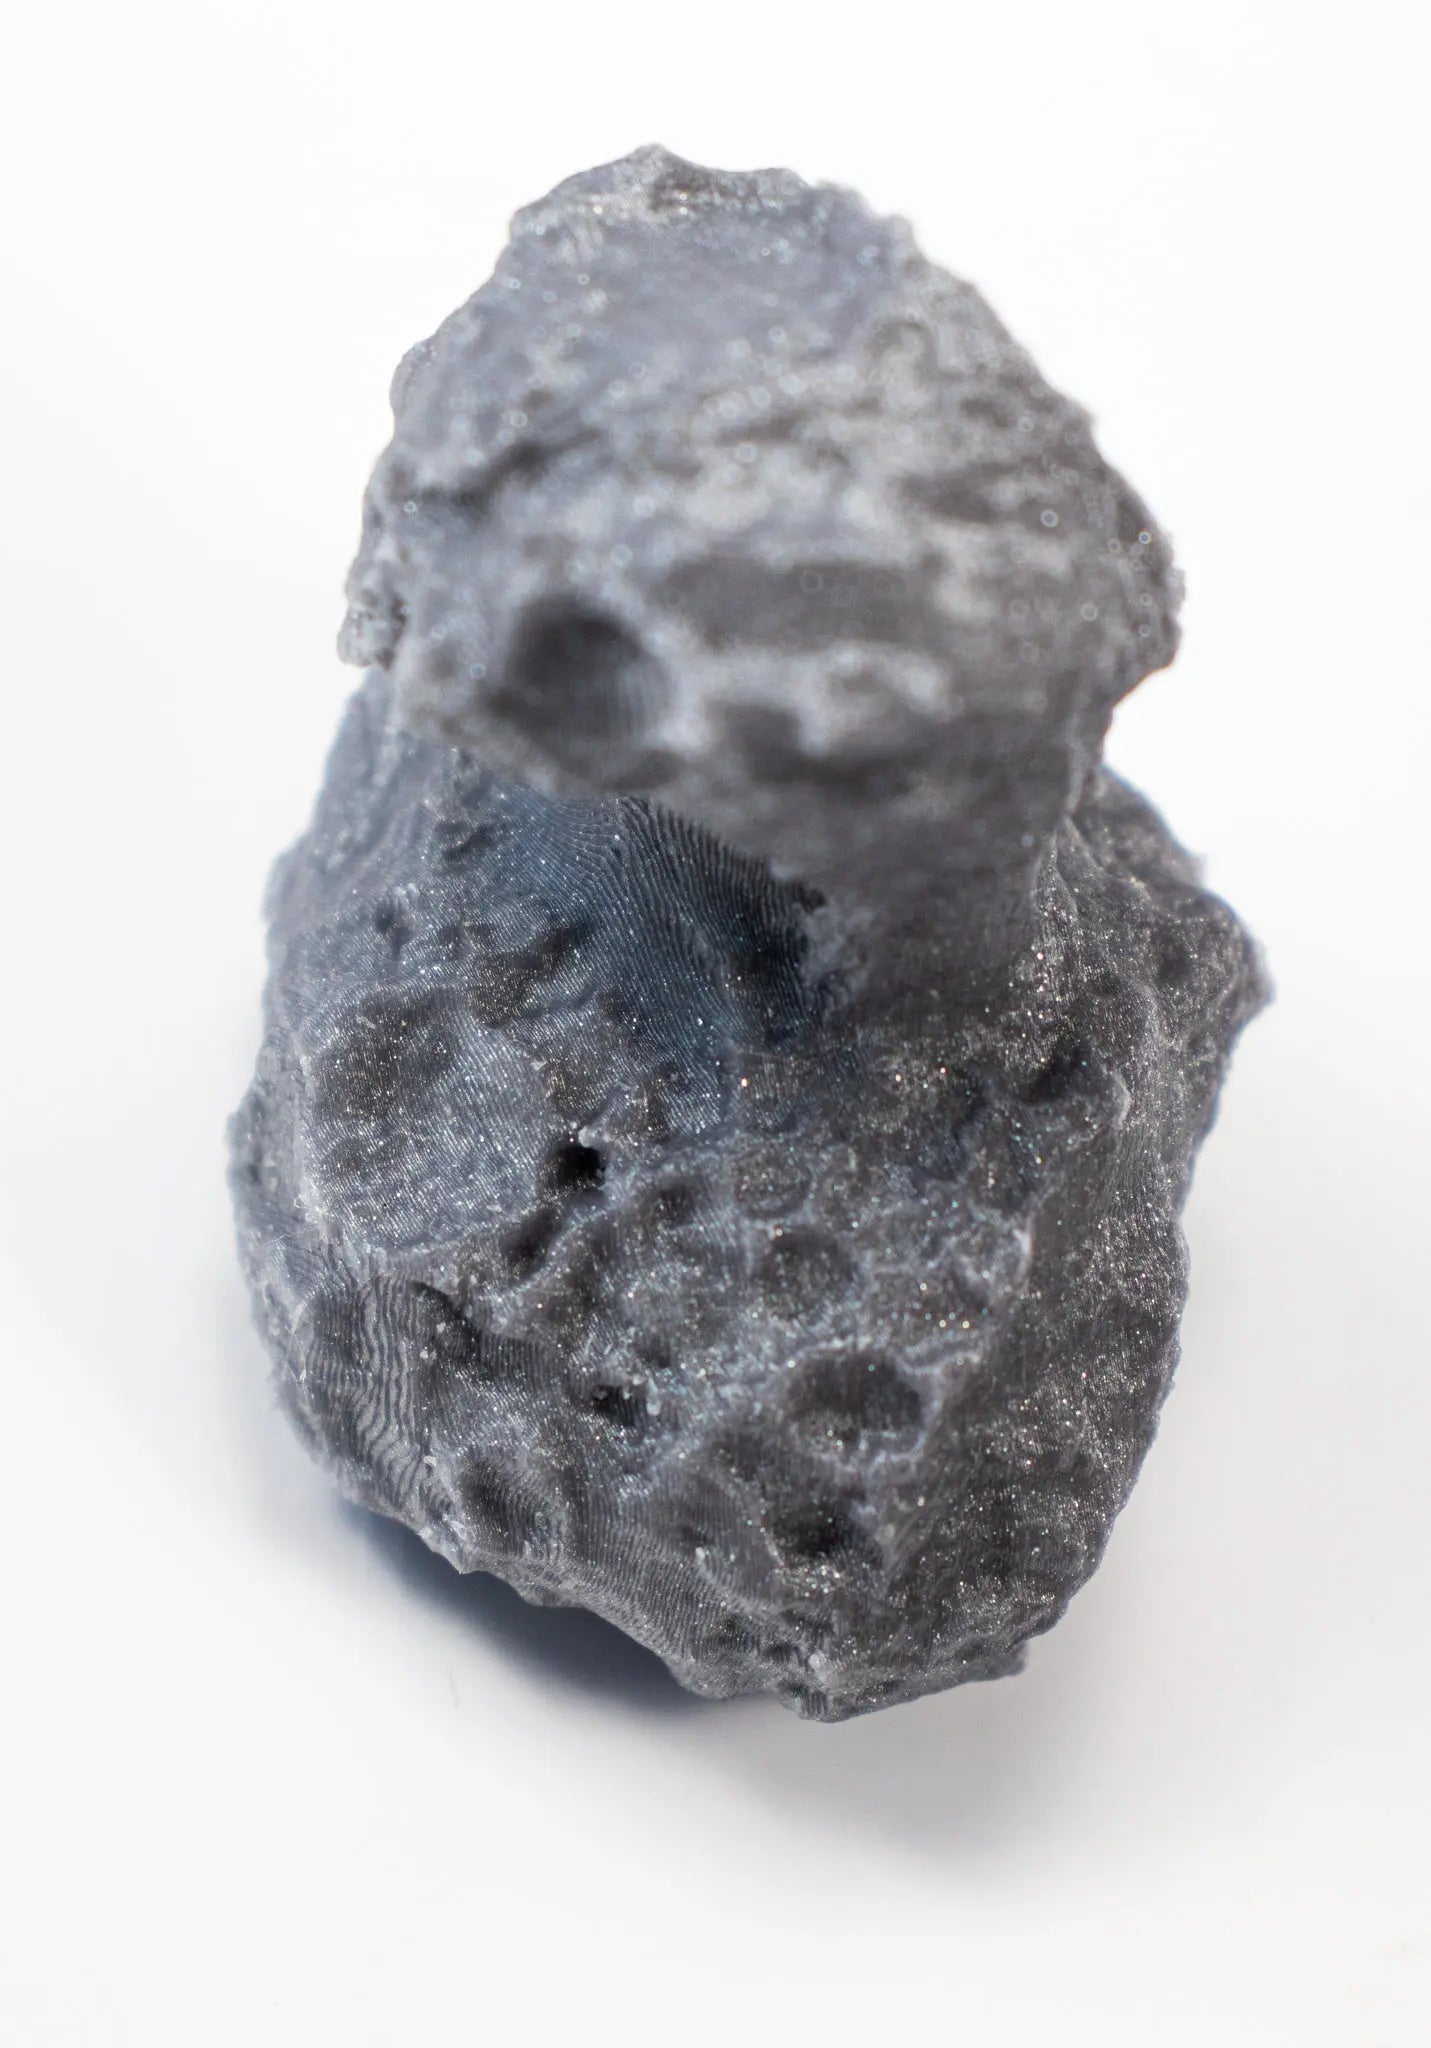 Comet Churyumov–Gerasimenko 3D Model - Stemcell Science Shop